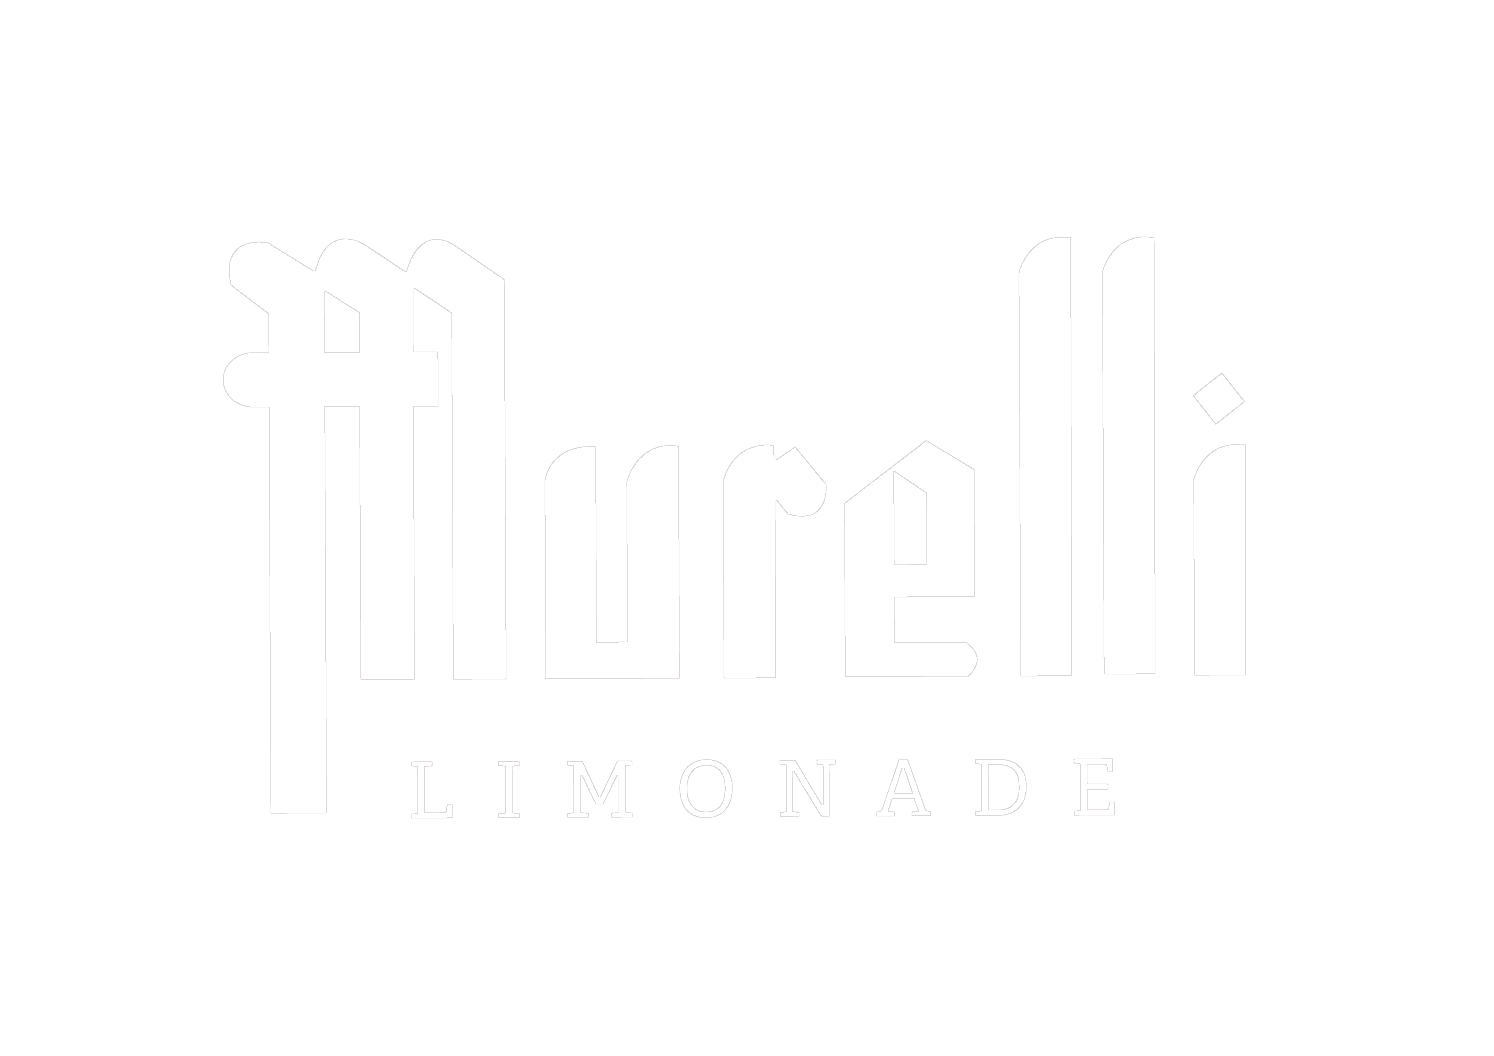 Murelli